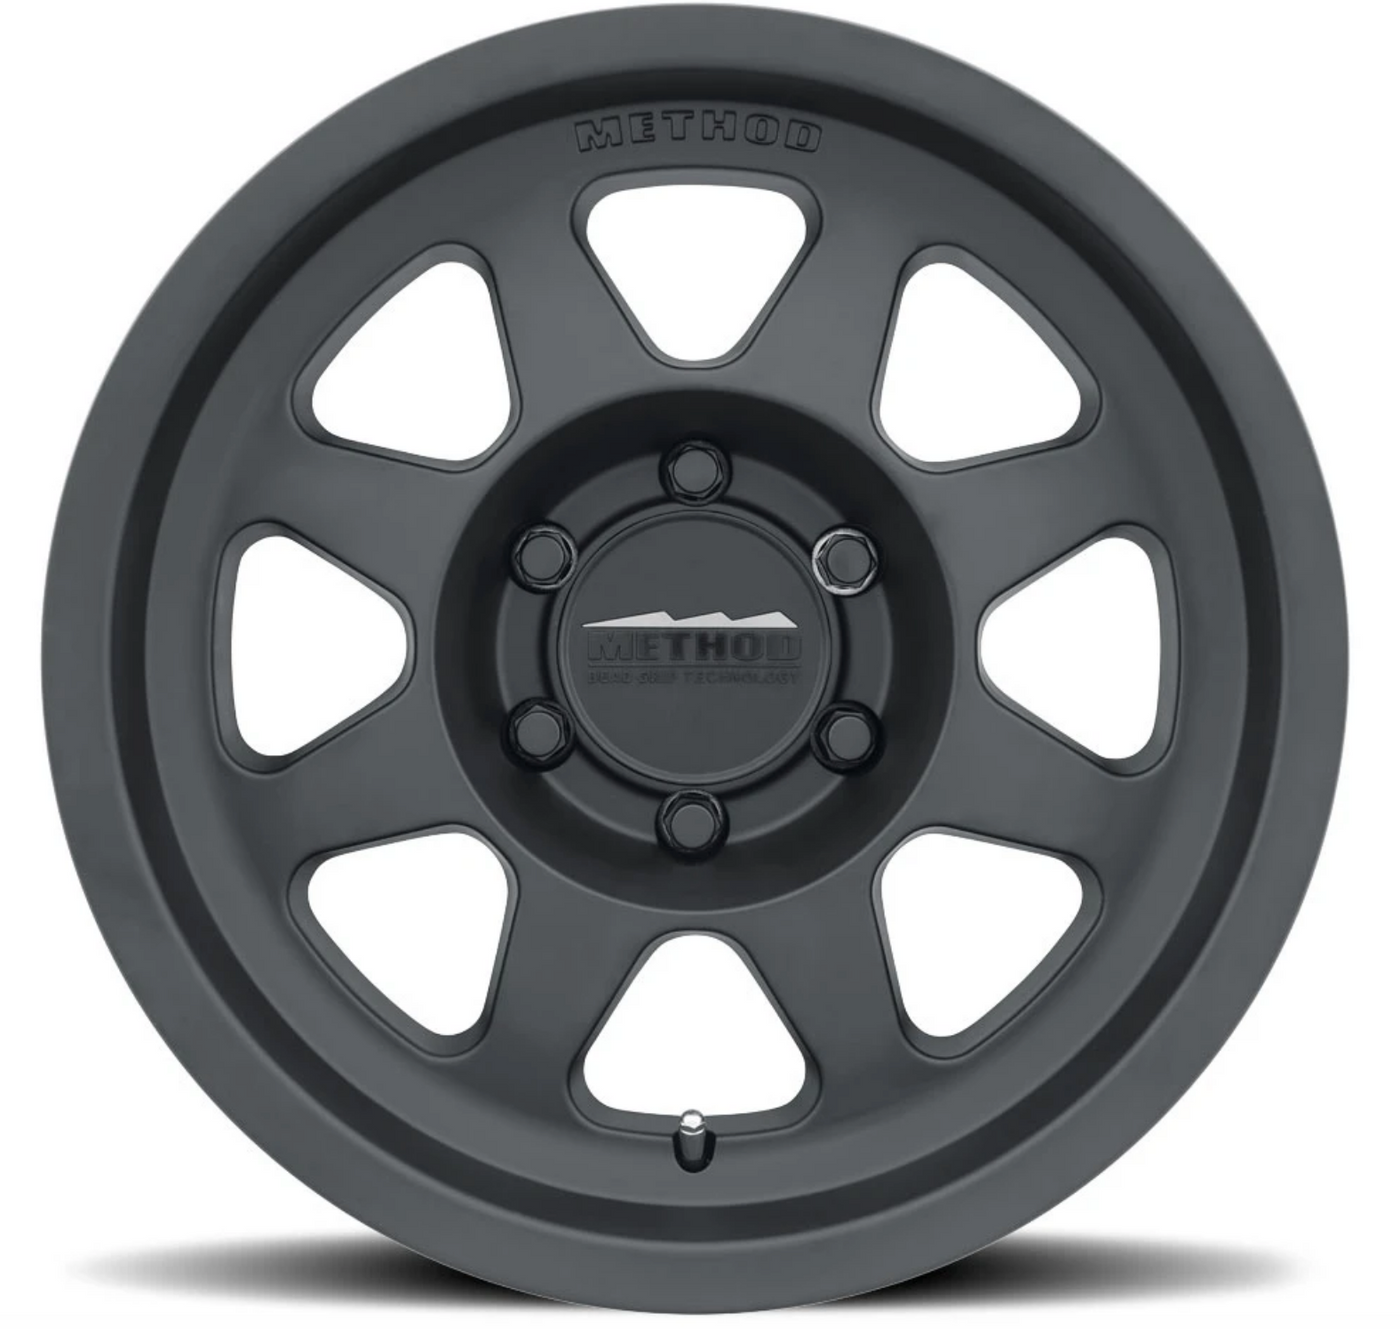 Method Race Wheels - 701 Matte Black 16s